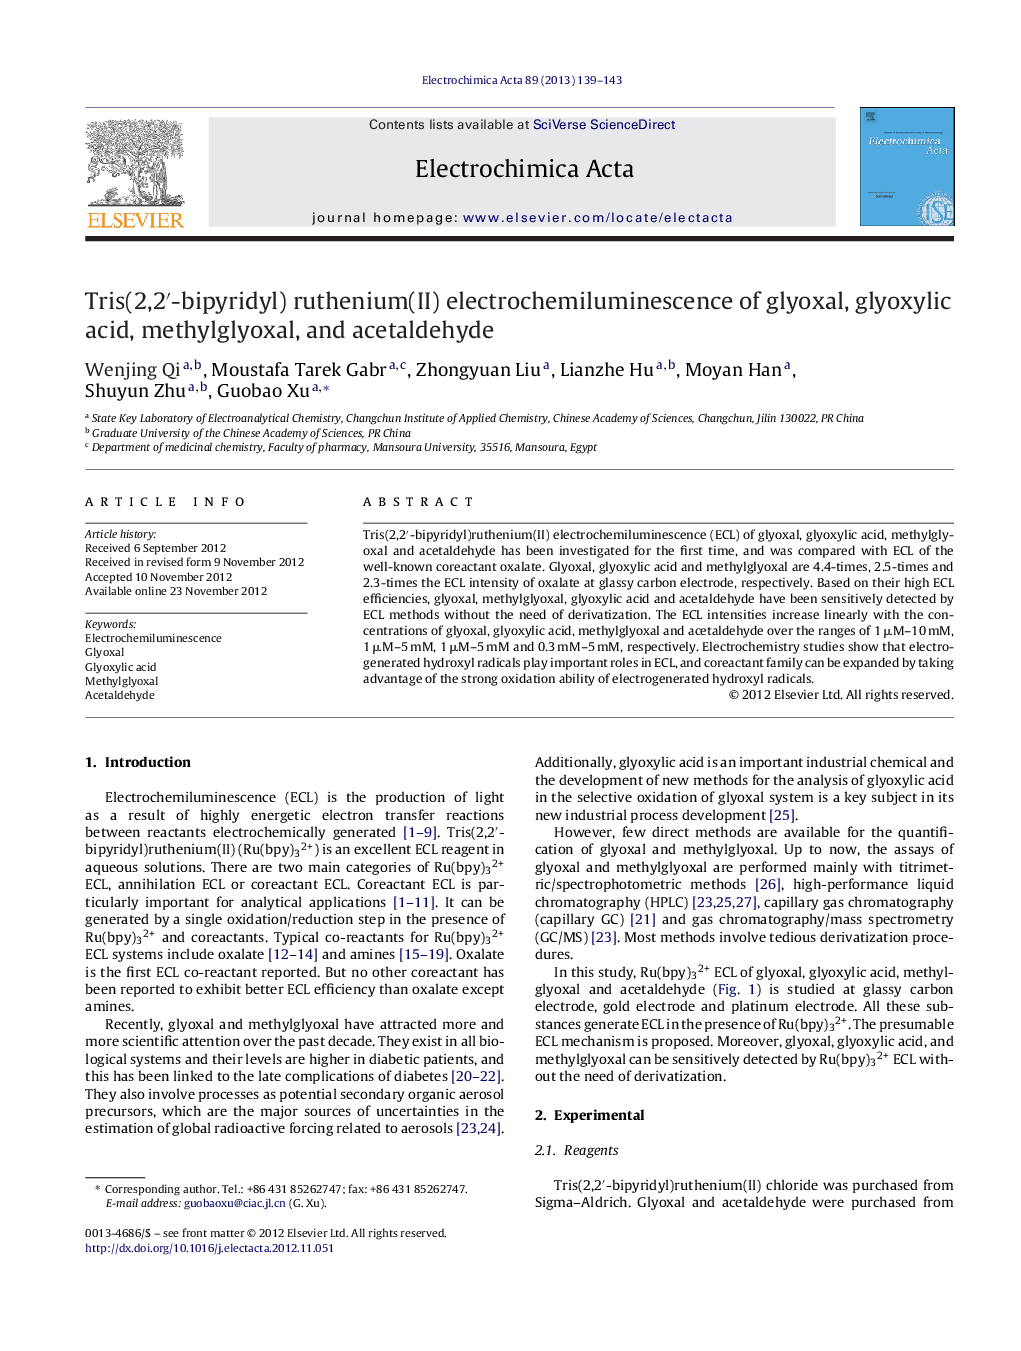 Tris(2,2′-bipyridyl) ruthenium(II) electrochemiluminescence of glyoxal, glyoxylic acid, methylglyoxal, and acetaldehyde